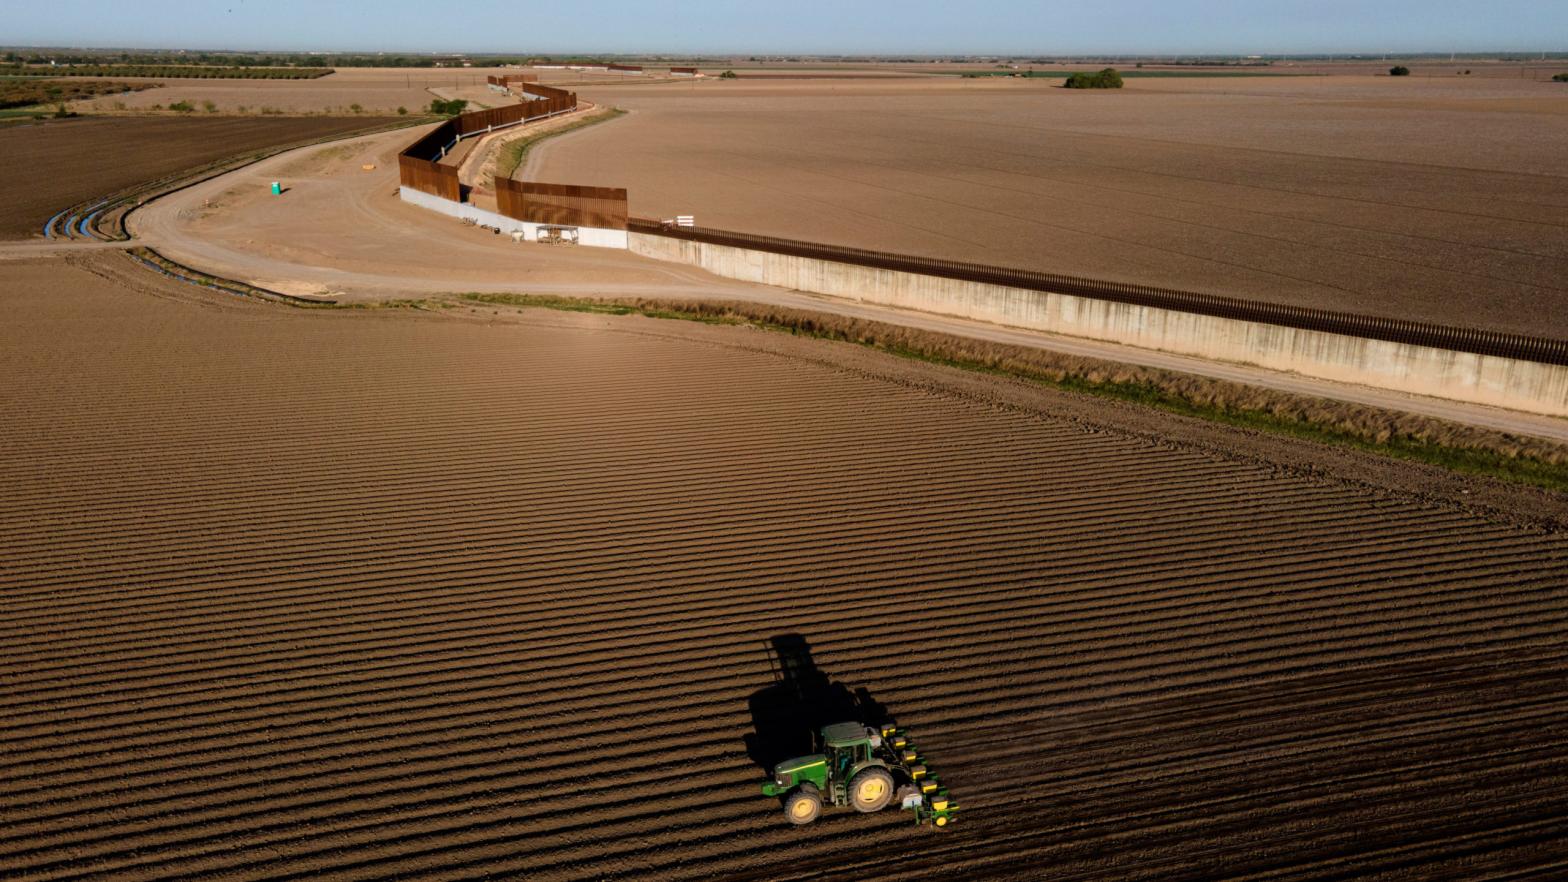 The border wall construction is seen near farmland as a tractor plows a field in Progreso, Texas (Photo: Julio Cortez, AP)